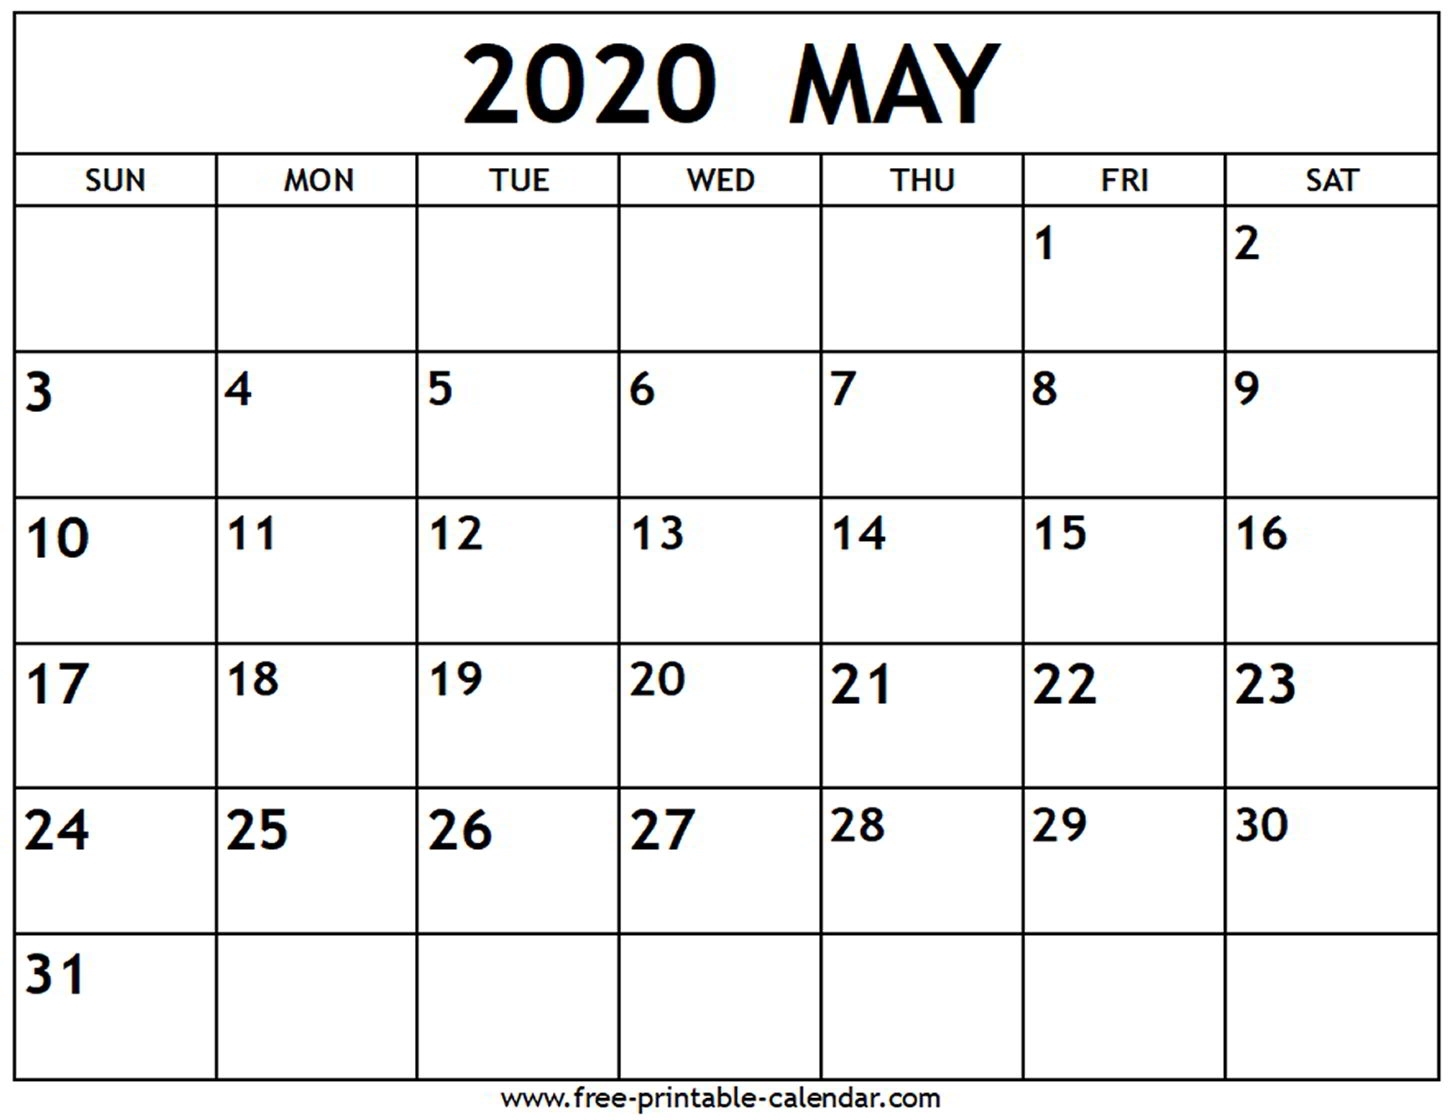 usable-printable-calendar-free-month-calendar-printable